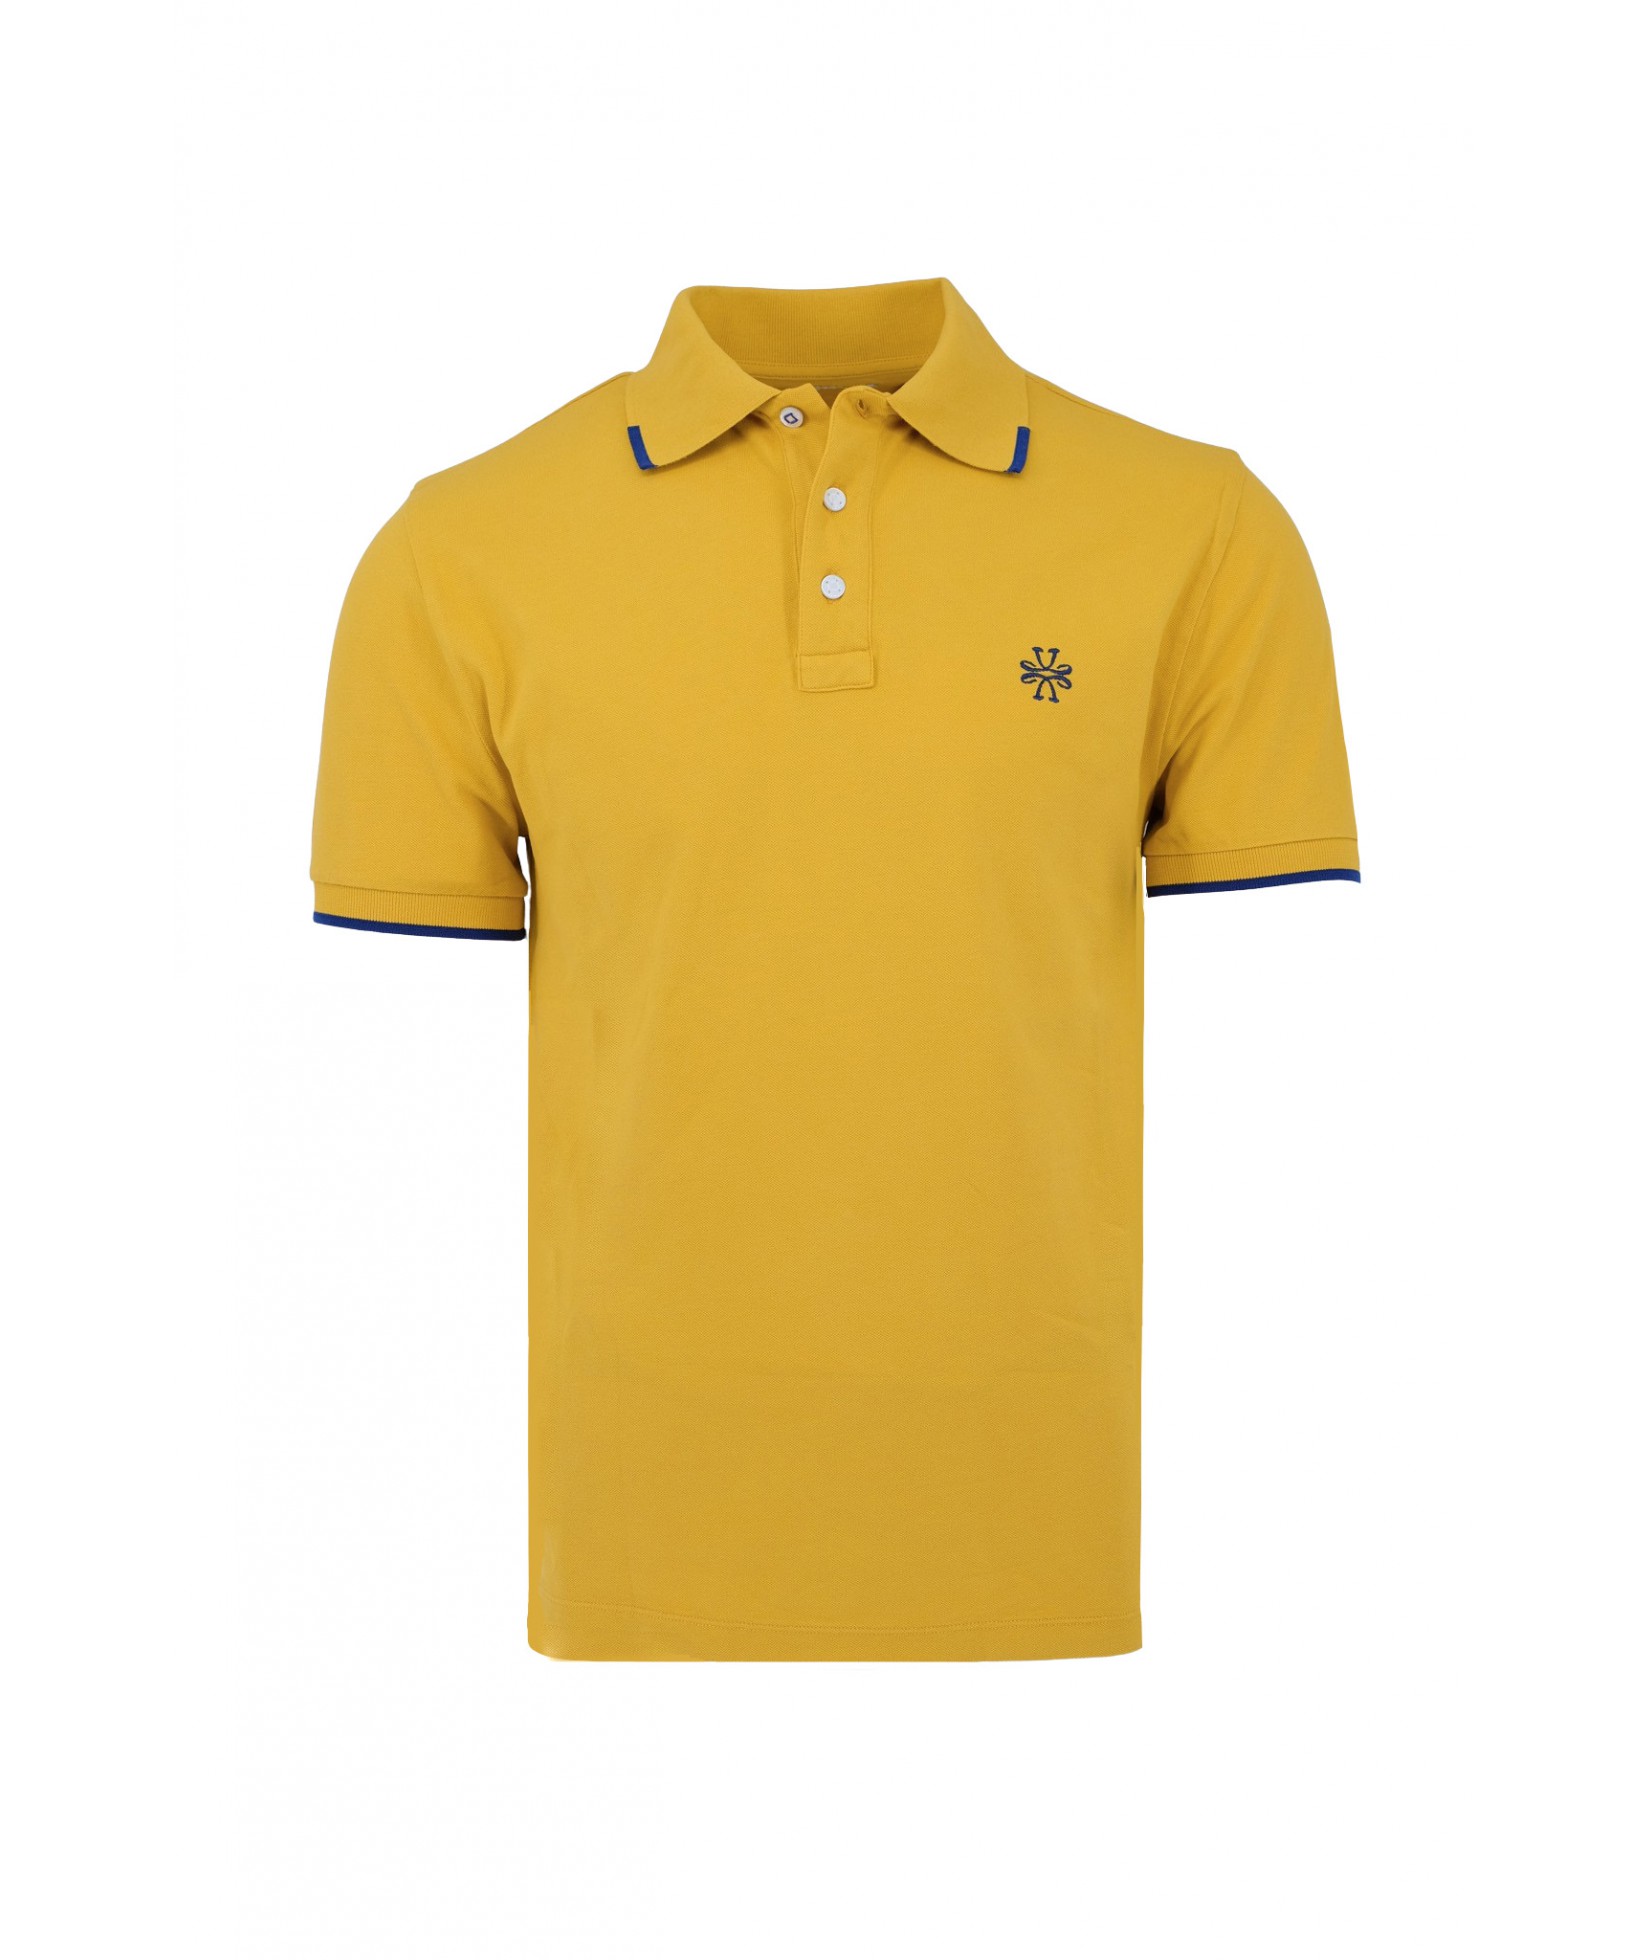 Jacob Cohen Polo shirt ocher yellow 2464 I74 (38889)